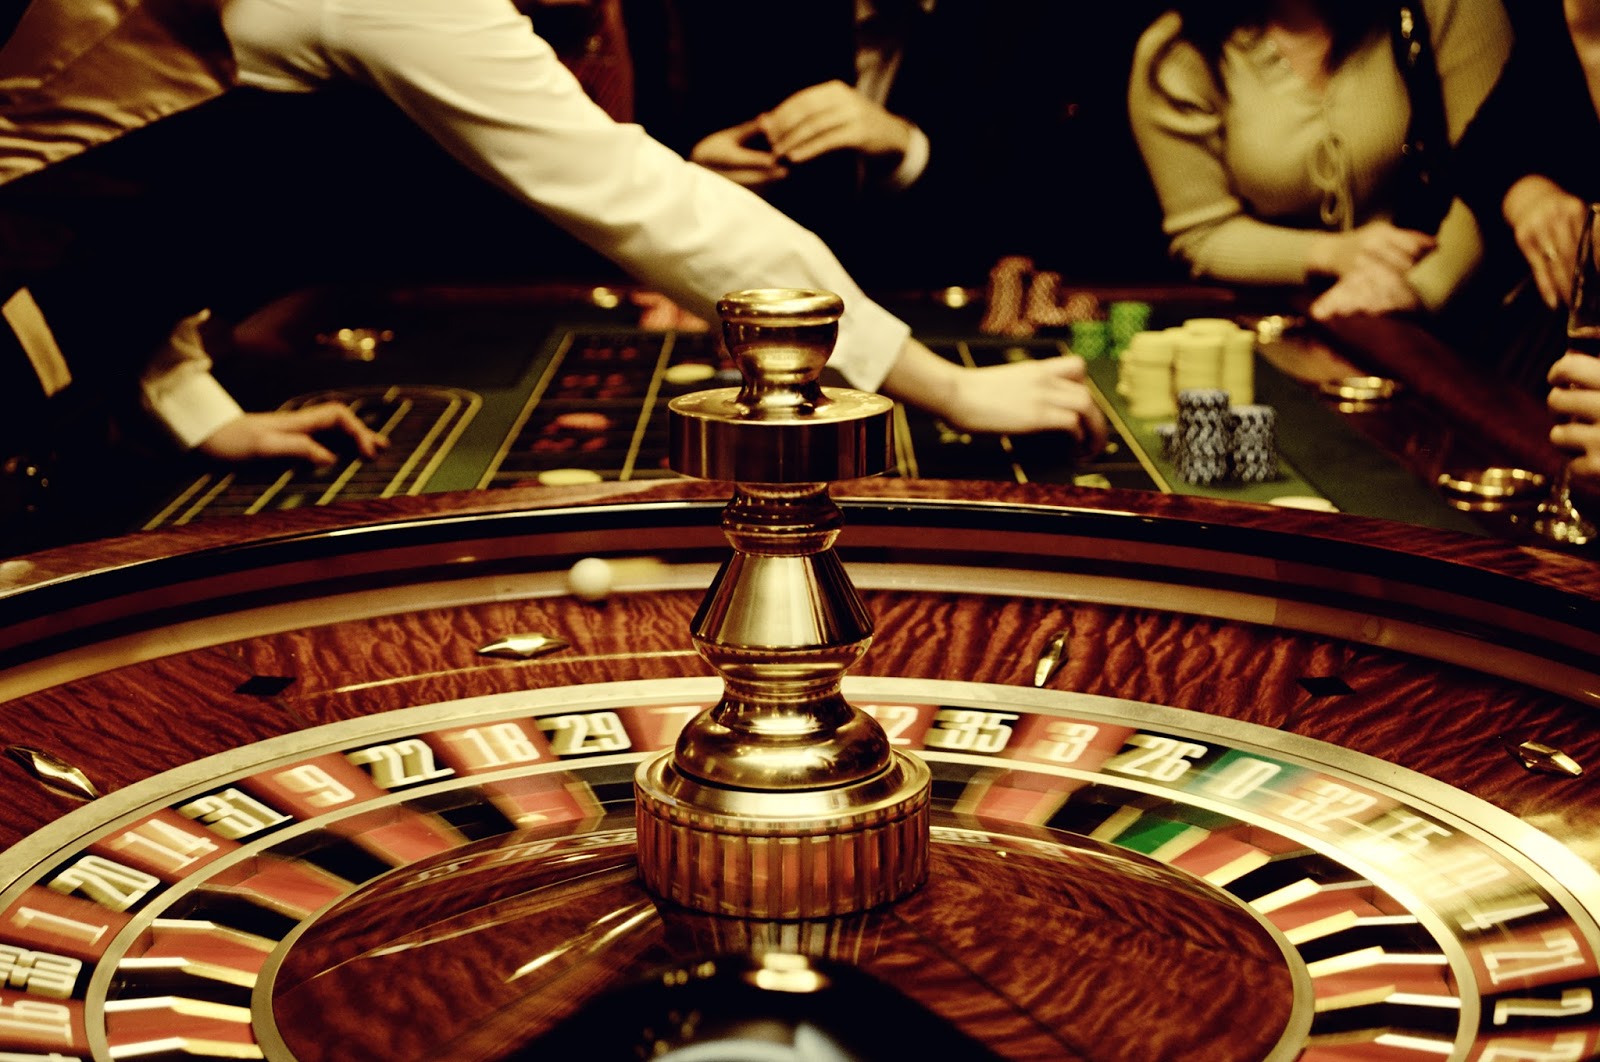 nine casino online